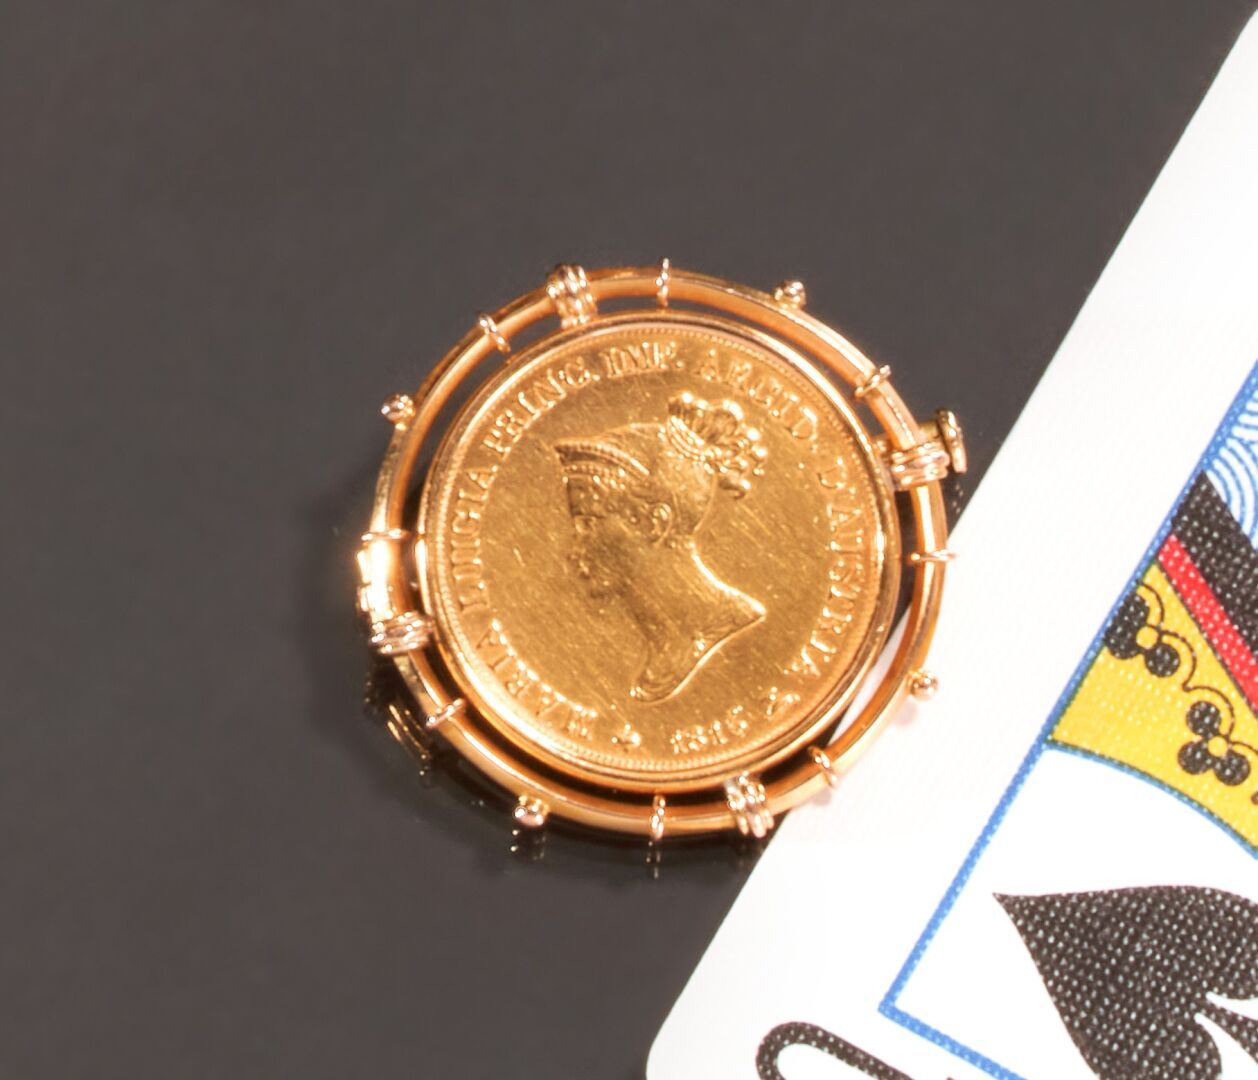 Null 七十五万分之一黄金胸针，中心装饰有一枚二十里拉的金币。
高度 : 2,6 cm
毛重 : 9,7 g